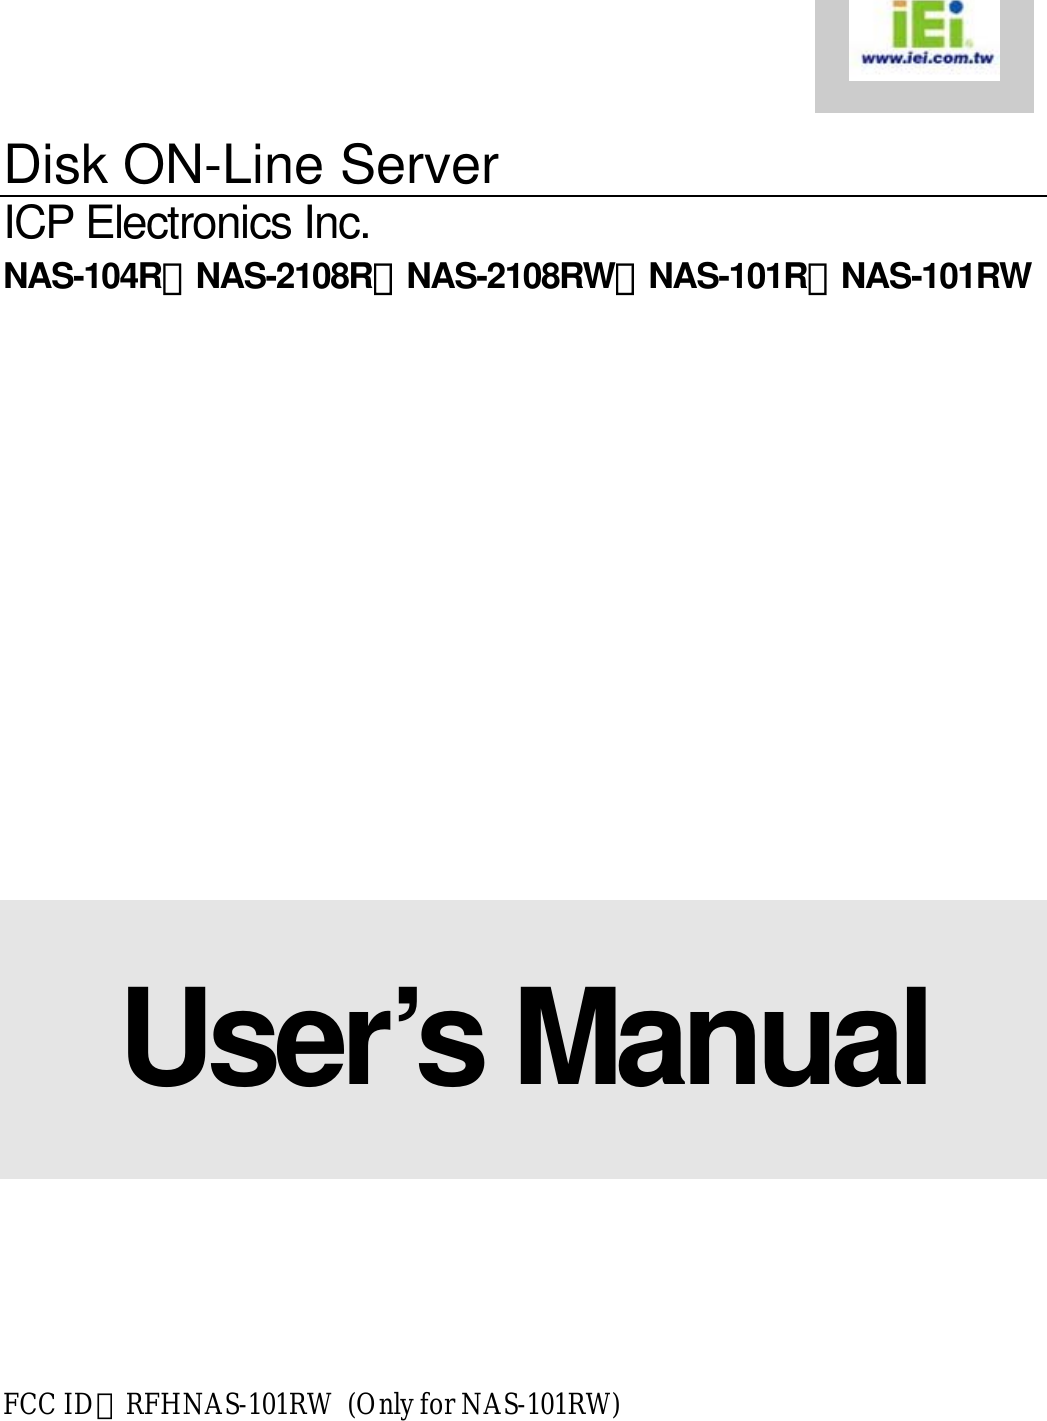 Disk ON-Line Server ICP Electronics Inc. NAS-104R．NAS-2108R．NAS-2108RW．NAS-101R．NAS-101RW   User’s Manual            FCC ID：RFHNAS-101RW  (Only for NAS-101RW)    